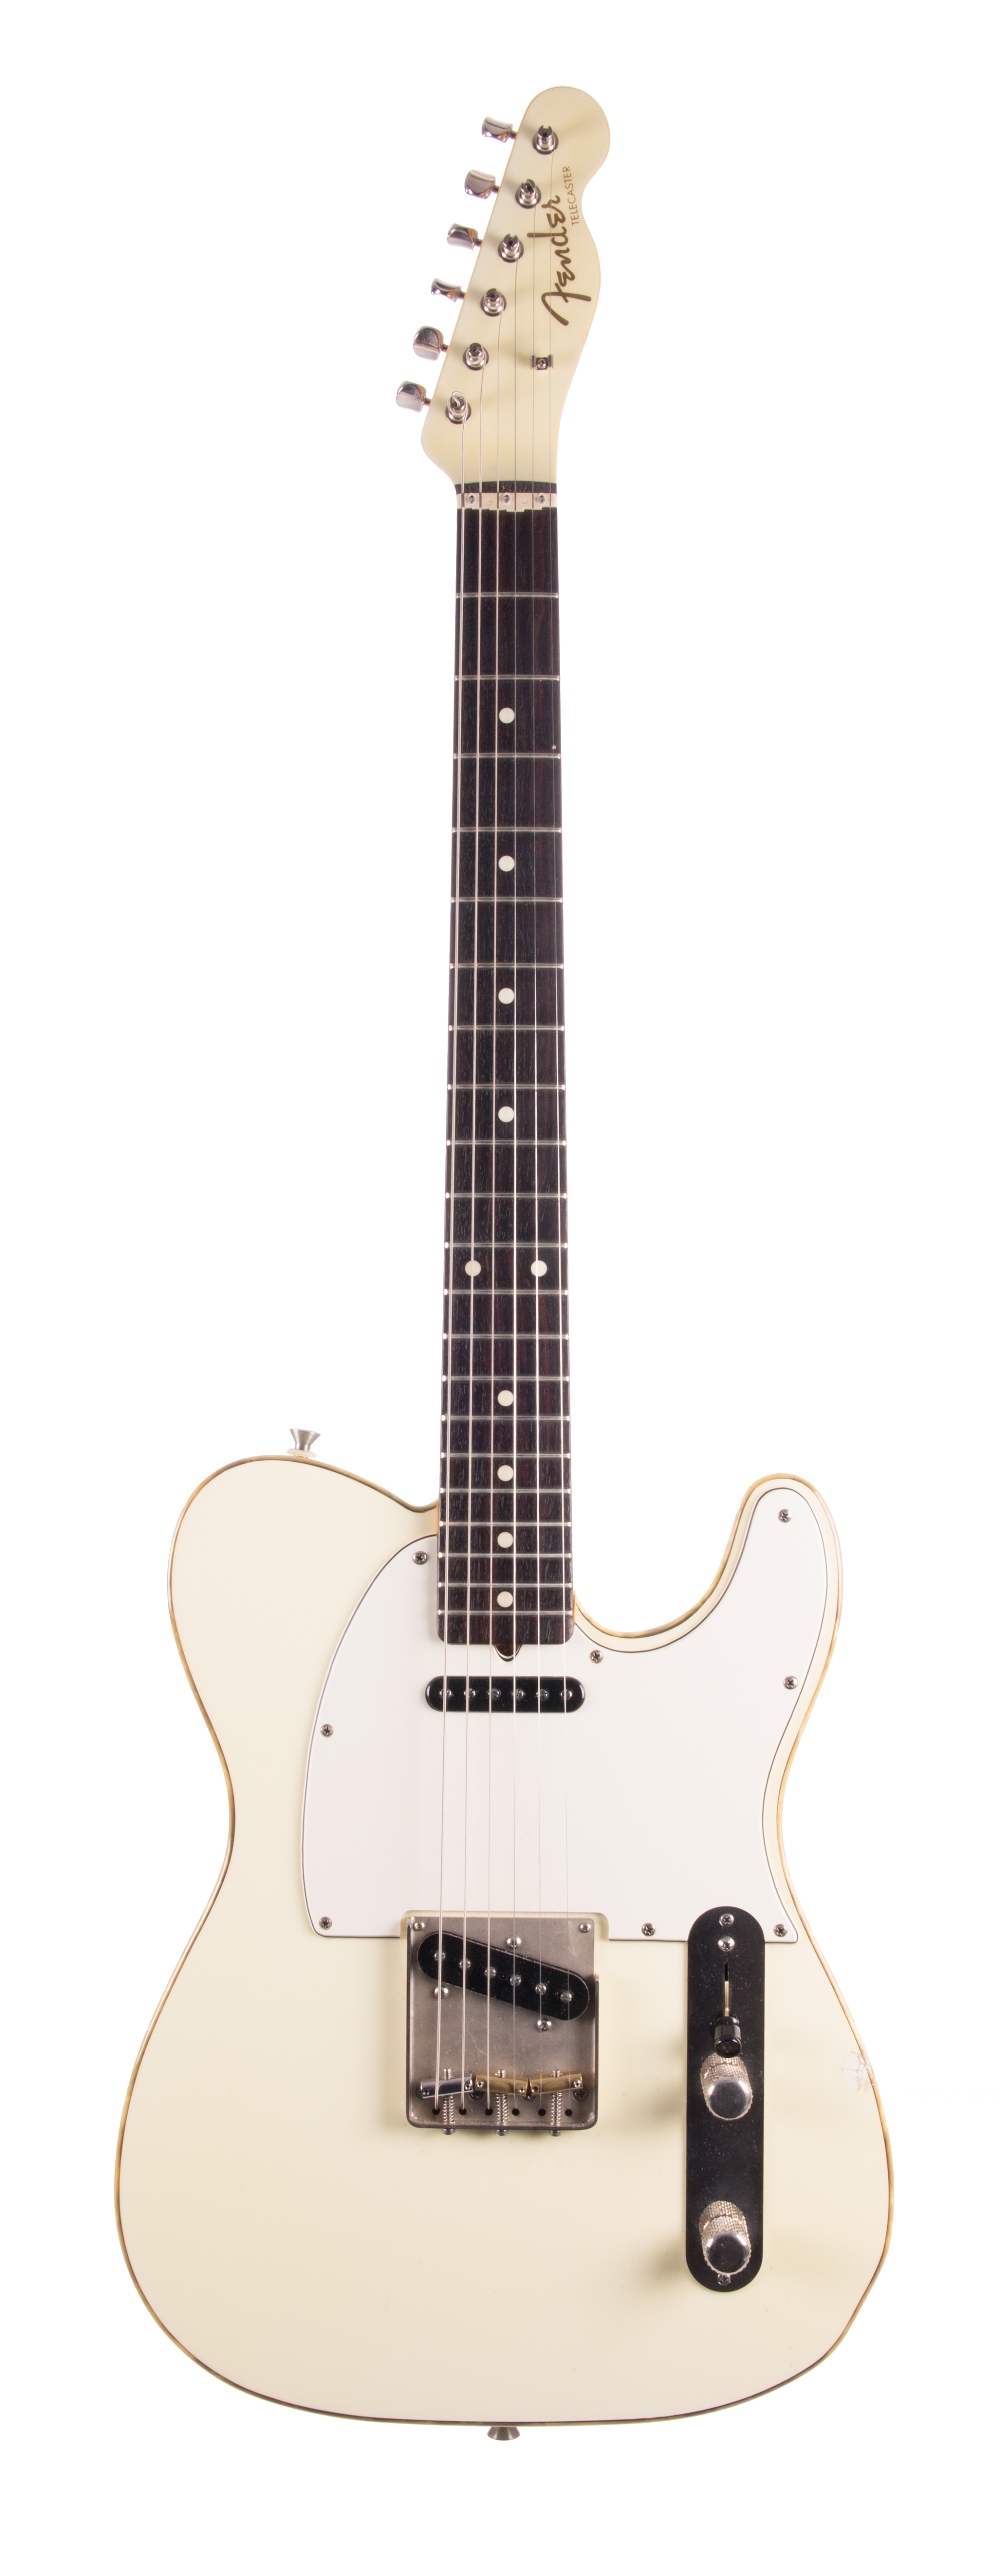 1996 Fender TLG-94P Telecaster Custom electric guitar, made in Japan, ser. no. V0xxxx1; Finish: